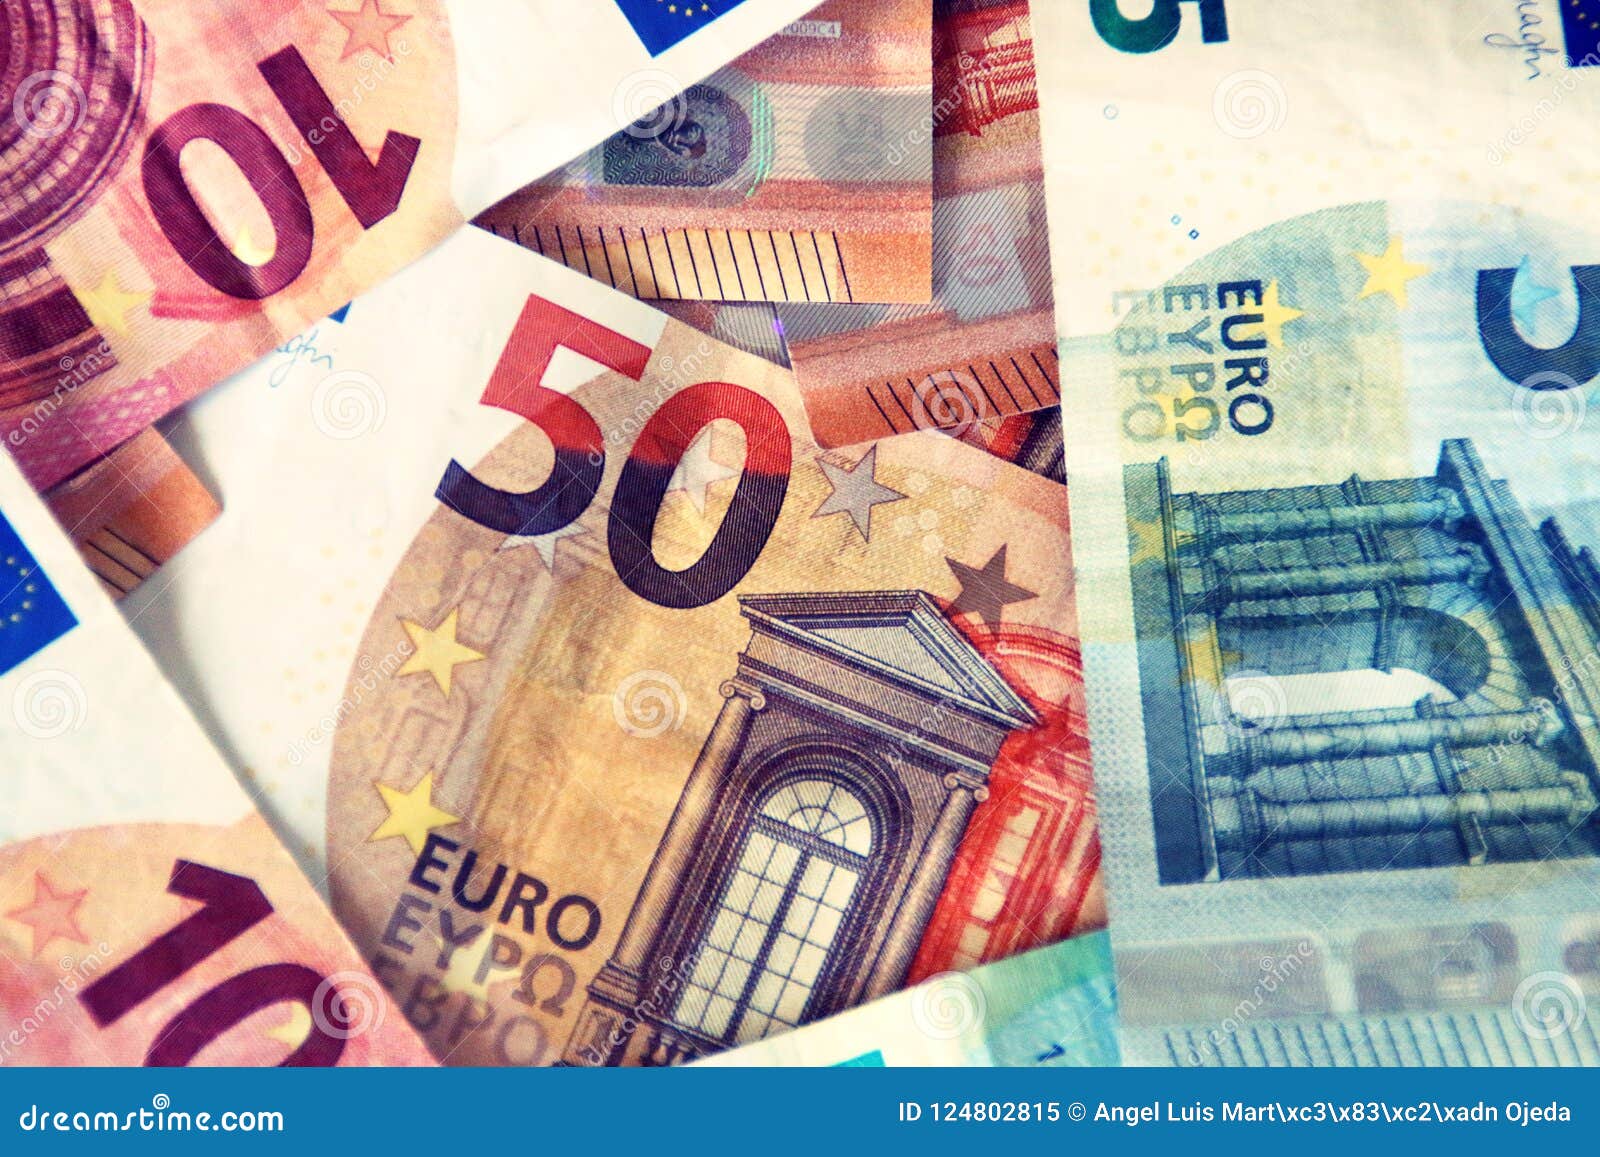 finance, bills/notes of euros.